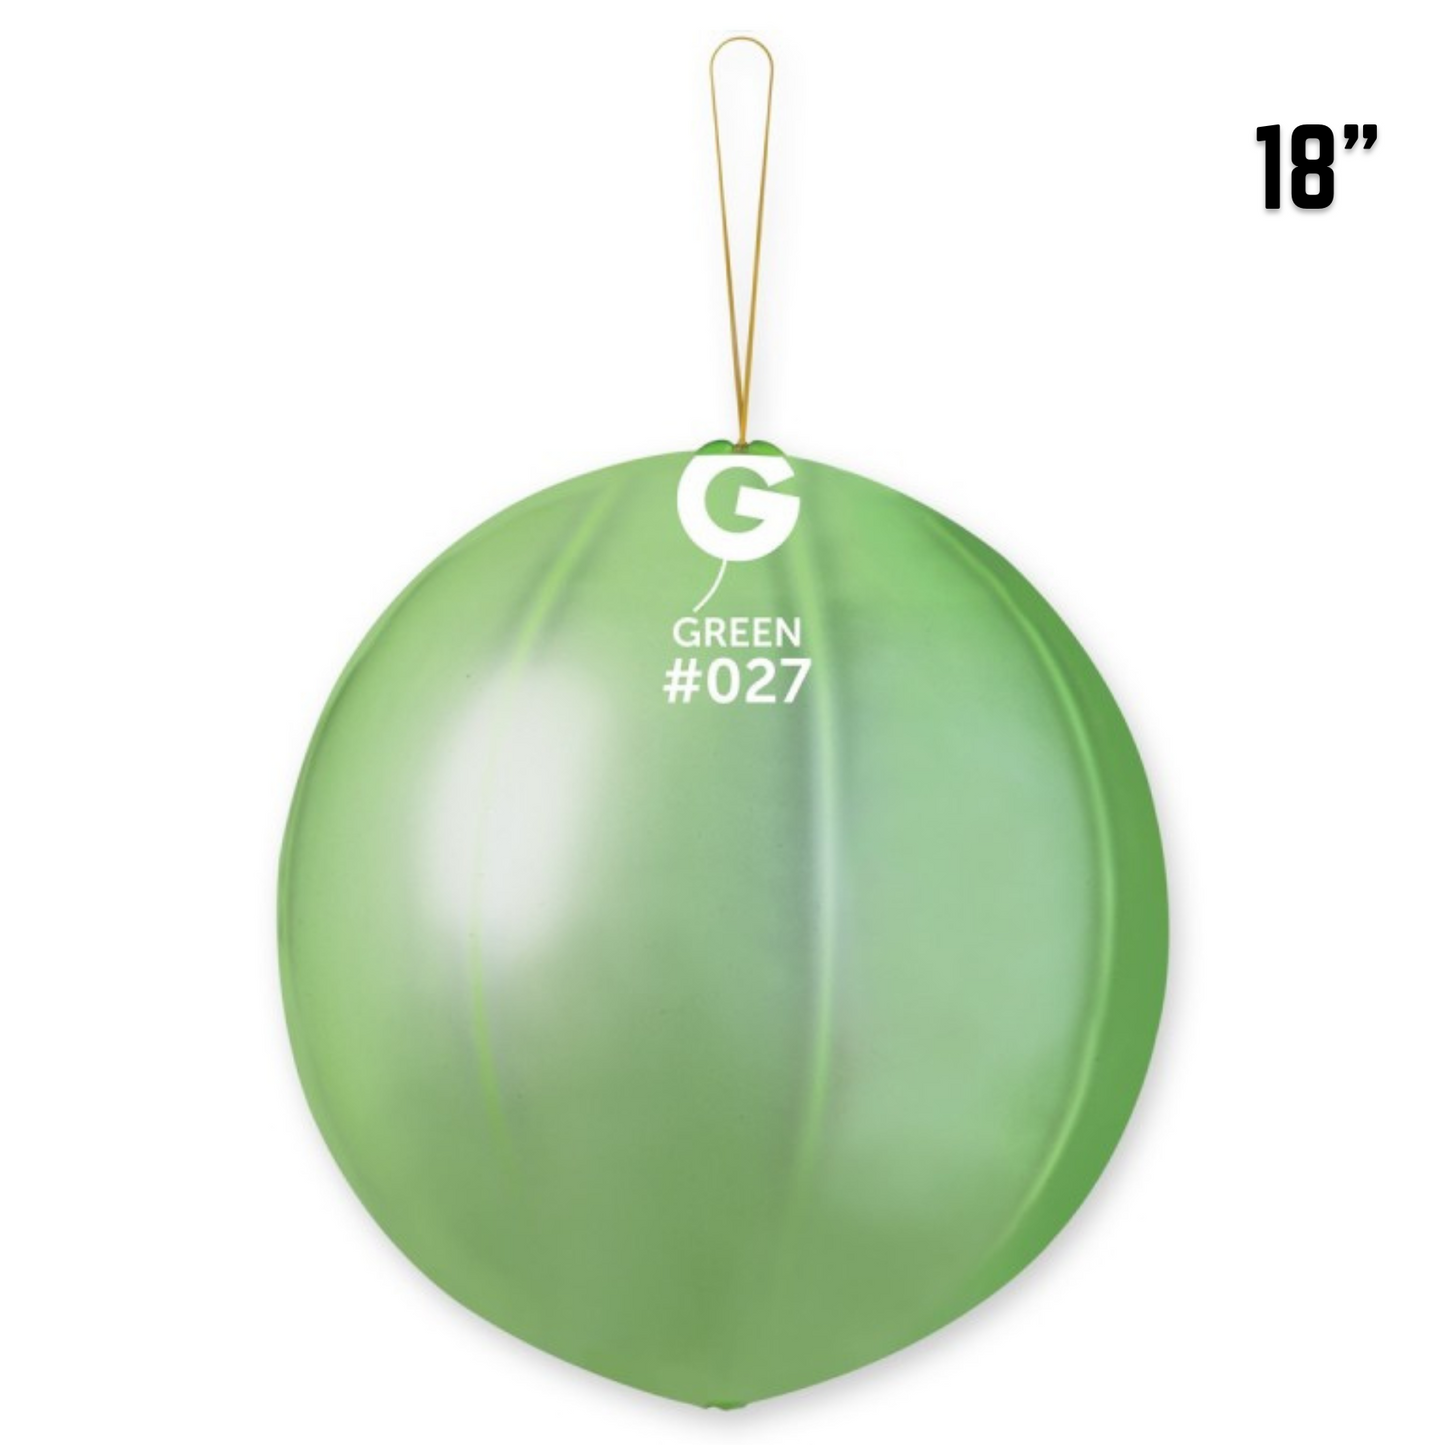 Neon Green Balloons